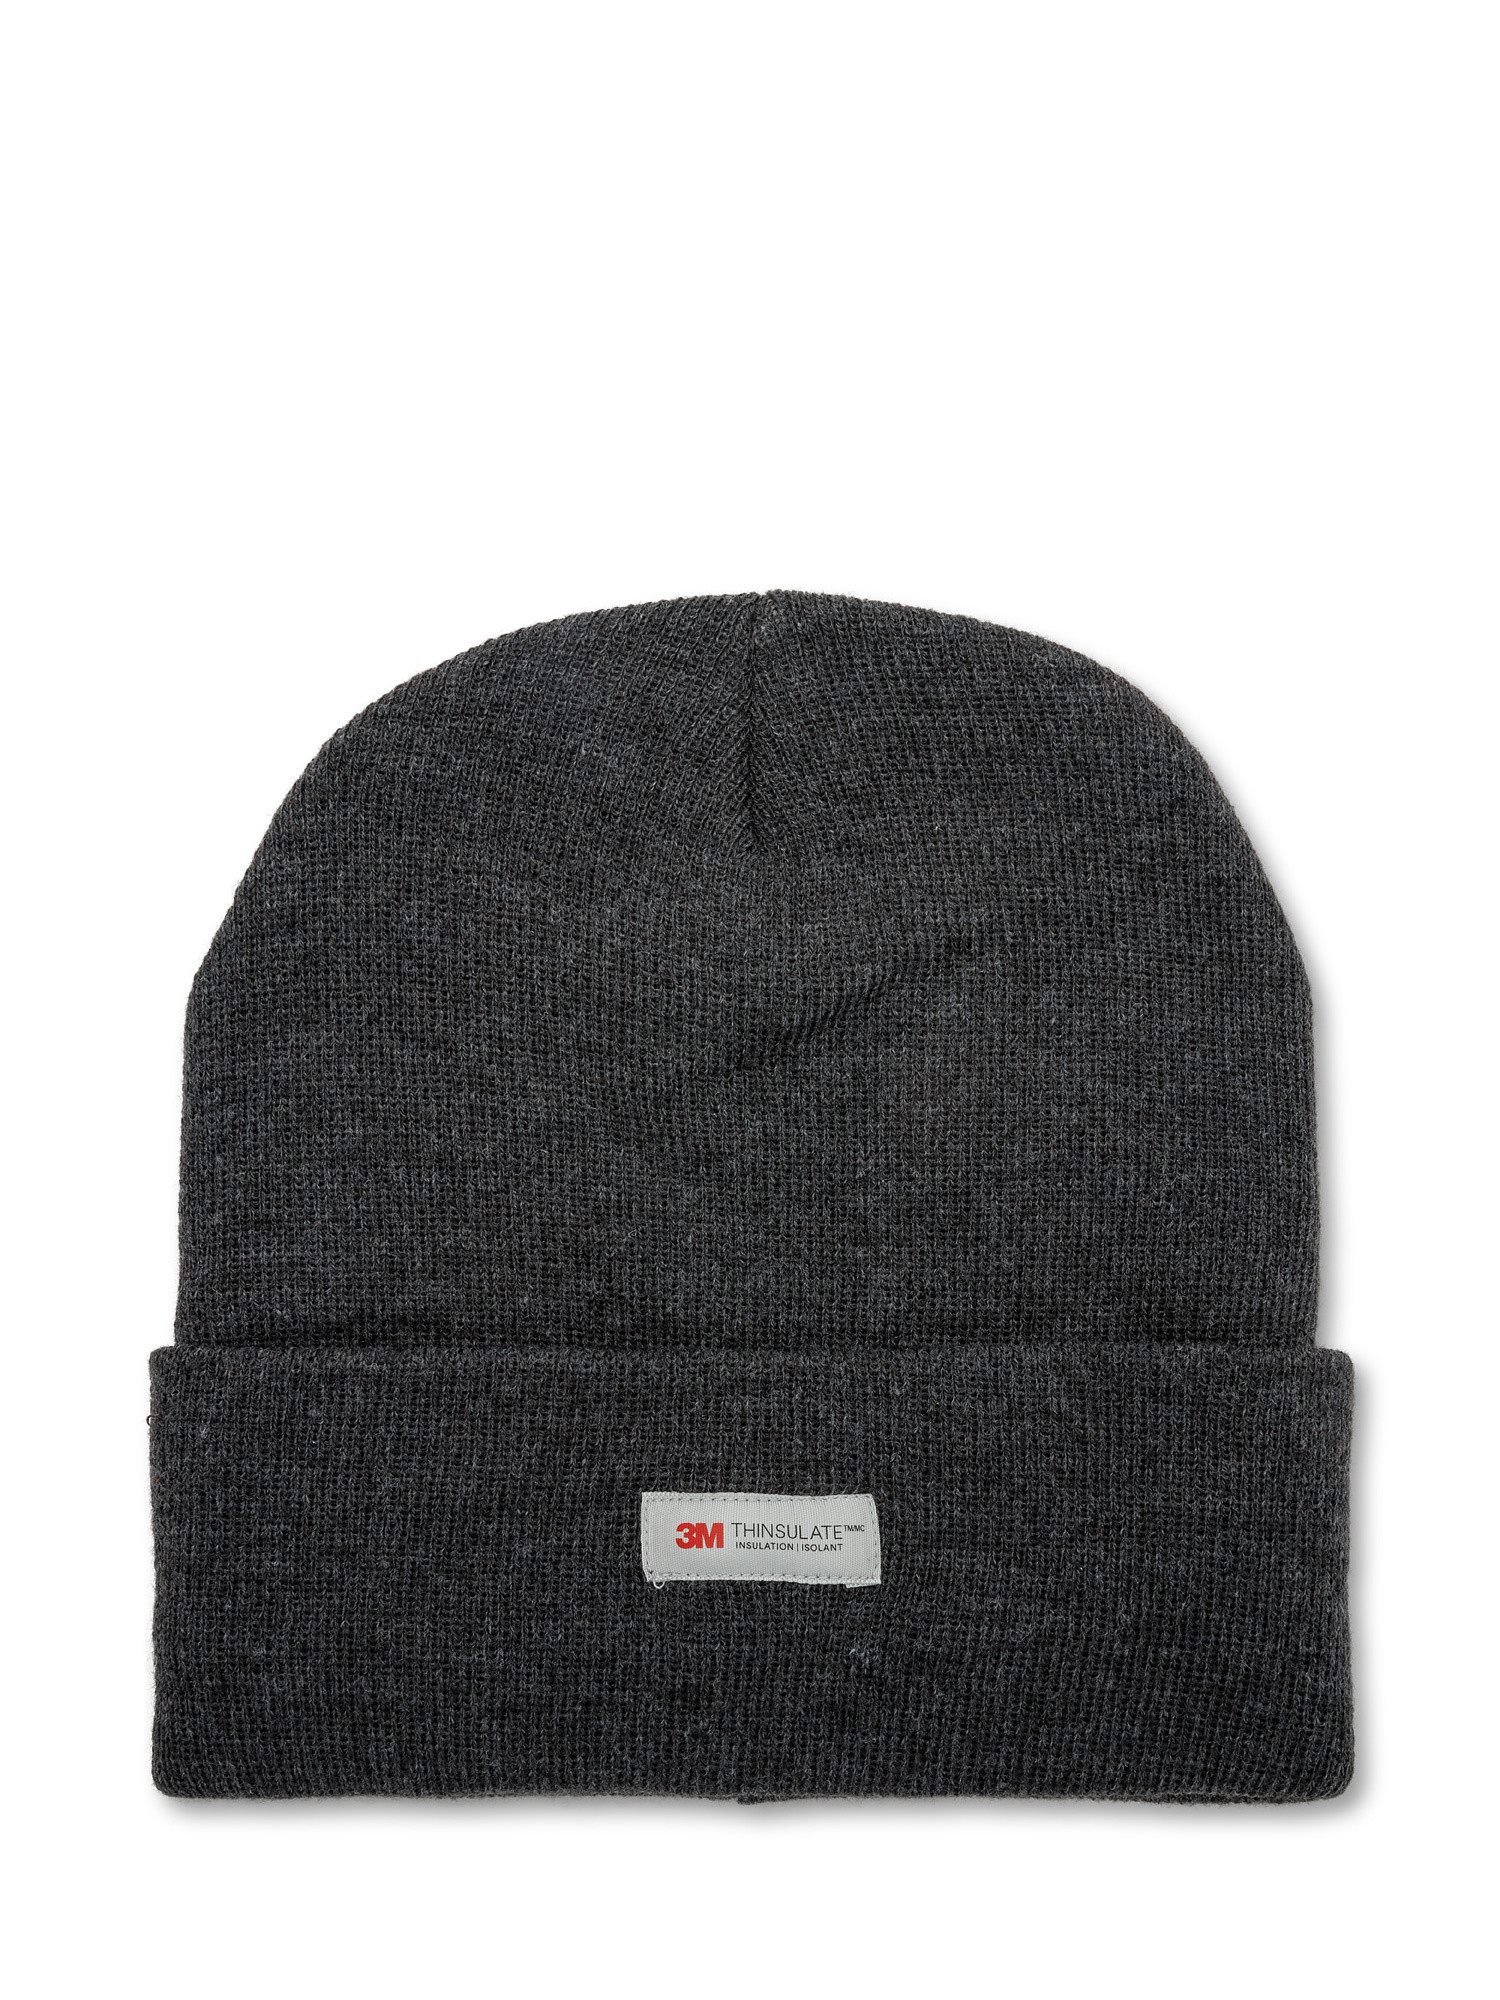 Thinsulate cap, Dark Grey, large image number 0